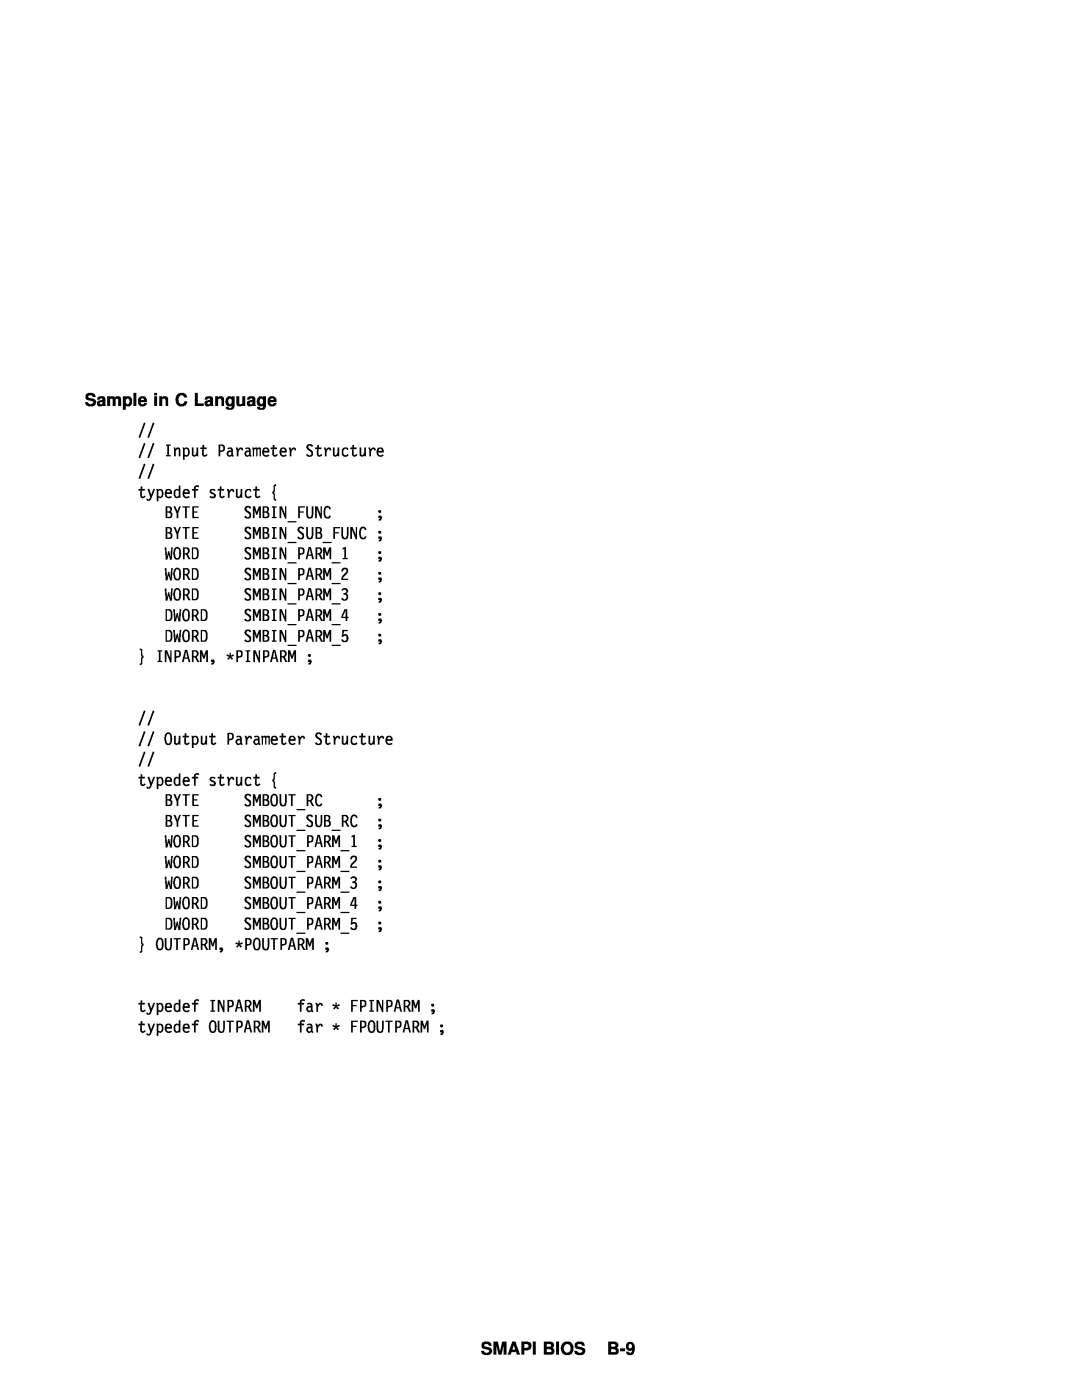 IBM 770 manual Sample in C Language, SMAPI BIOS B-9 